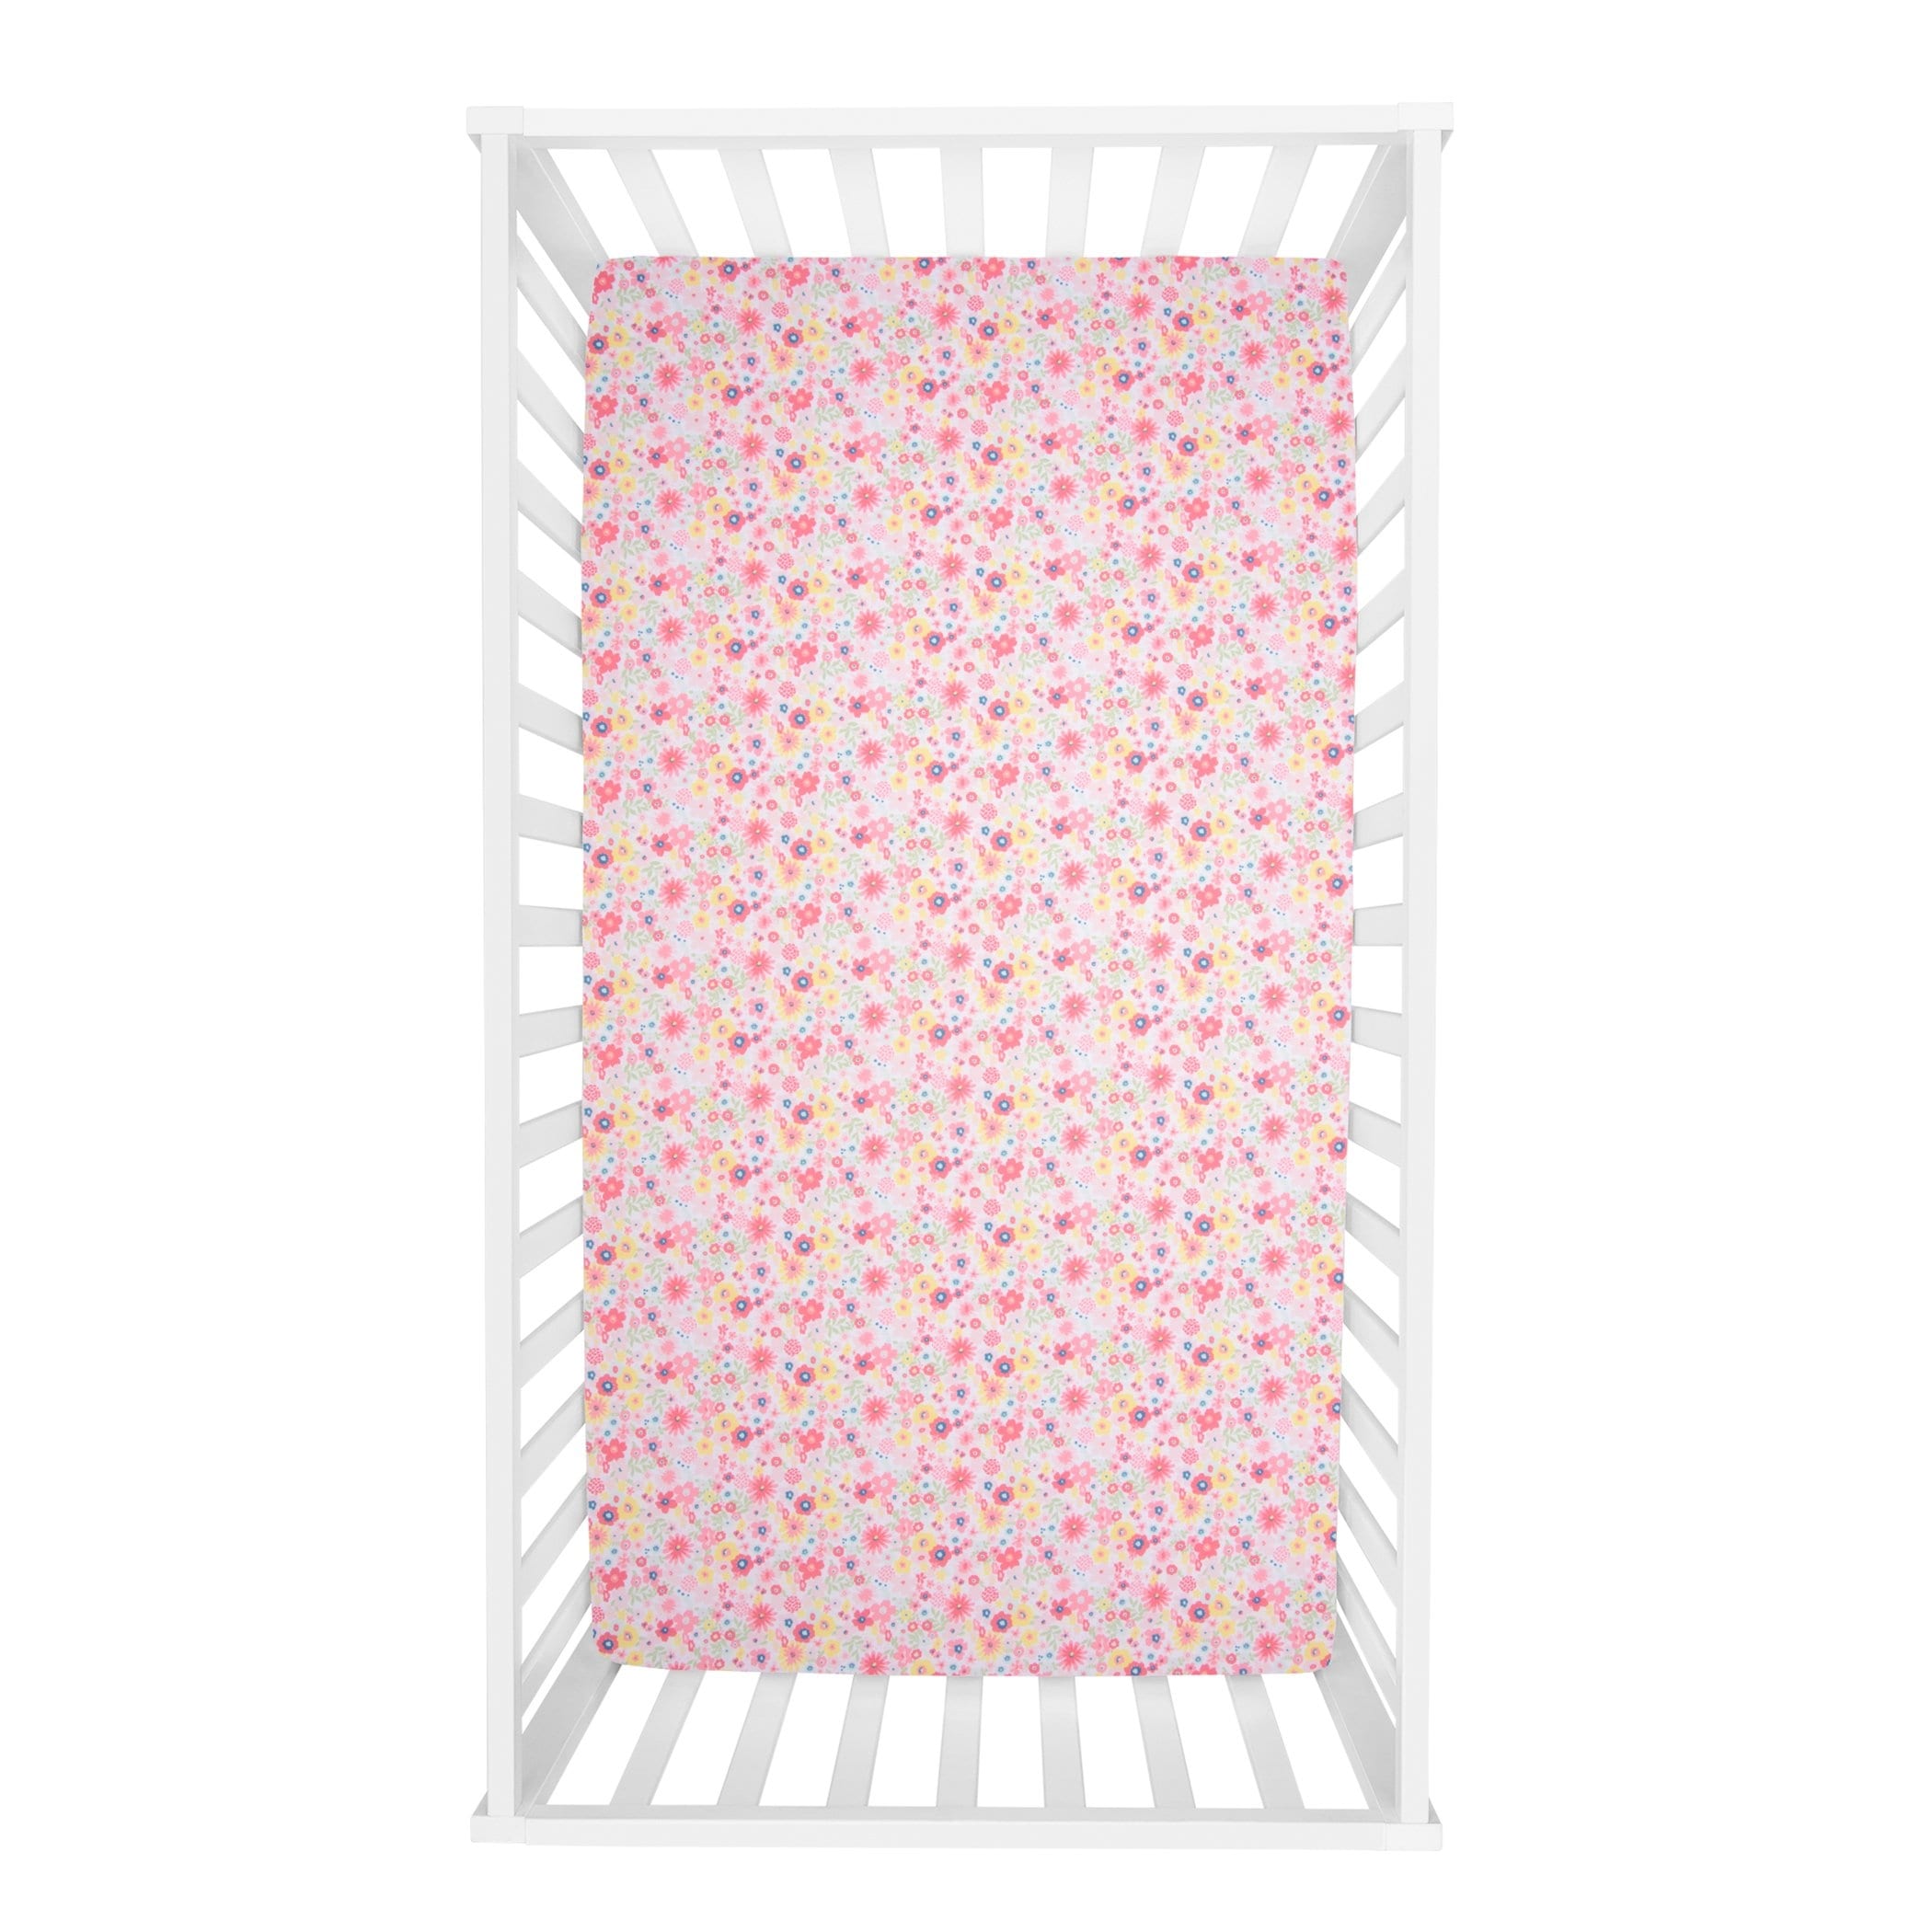 Floral Sprinkles 4 Piece Crib Bedding Set